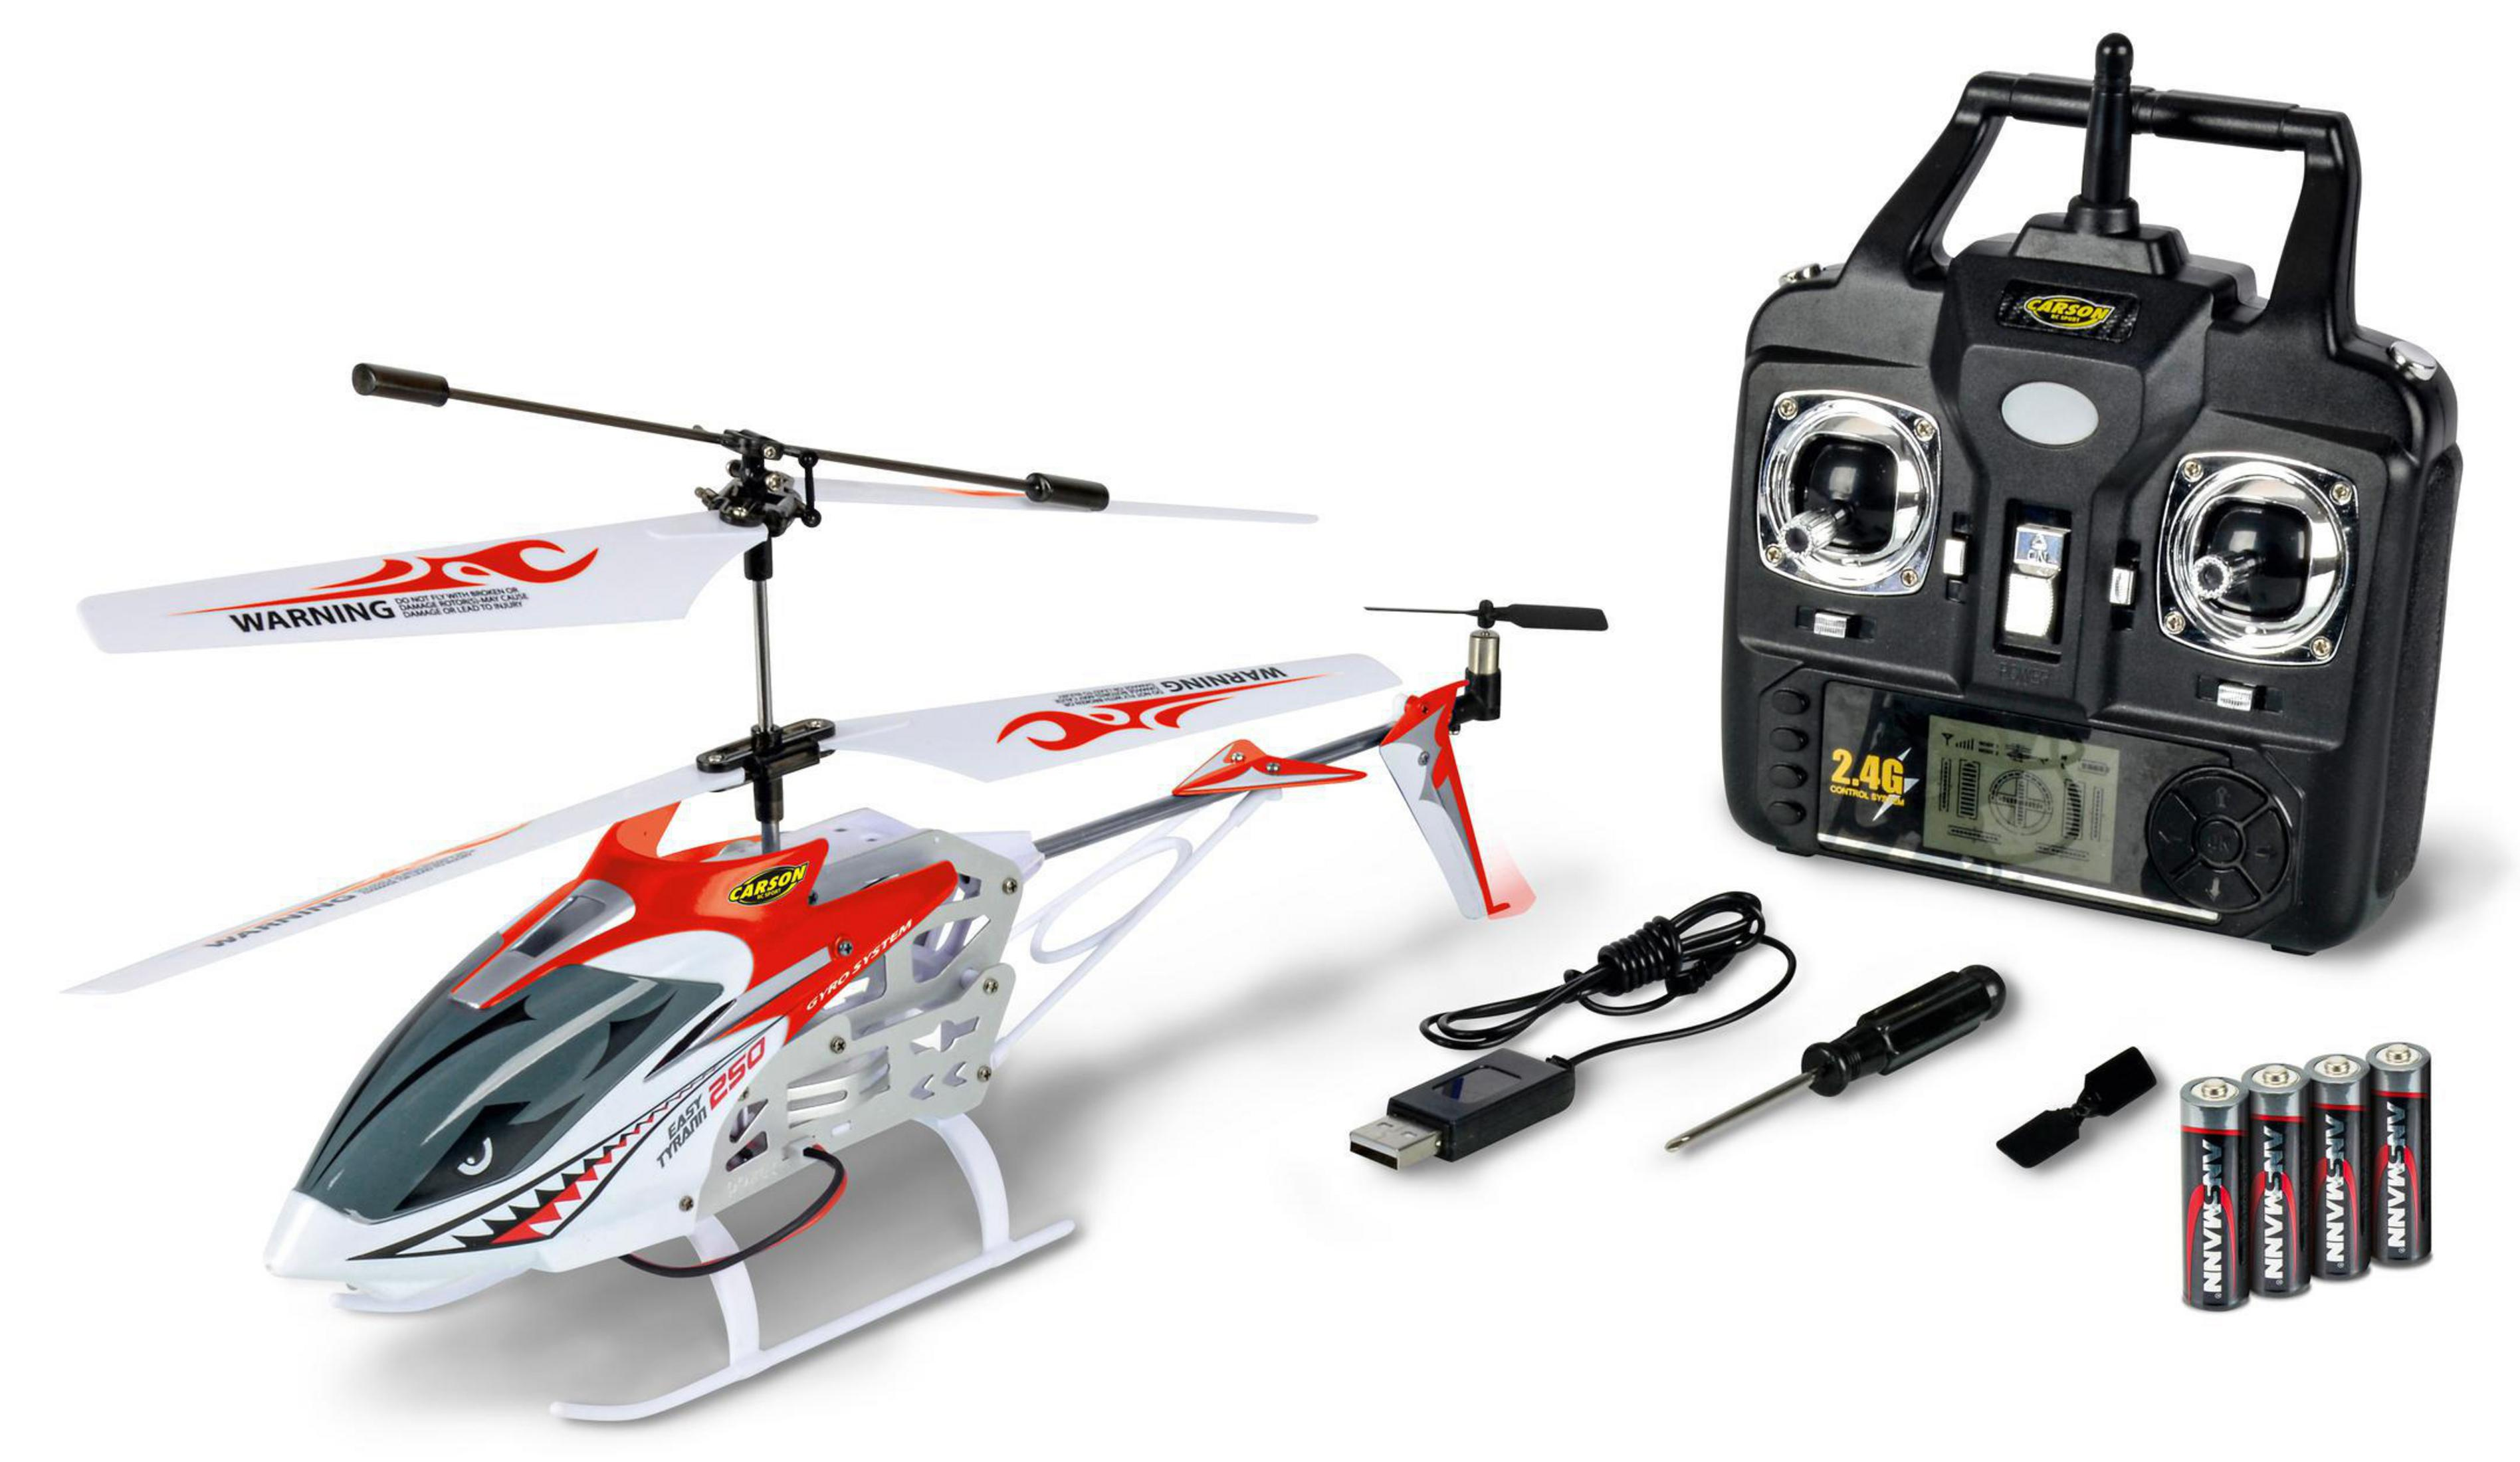 2.4G TYRANN 500507161 Spielzeughelikopter, ROT CARSON EASY 100%RTF 250 Rot